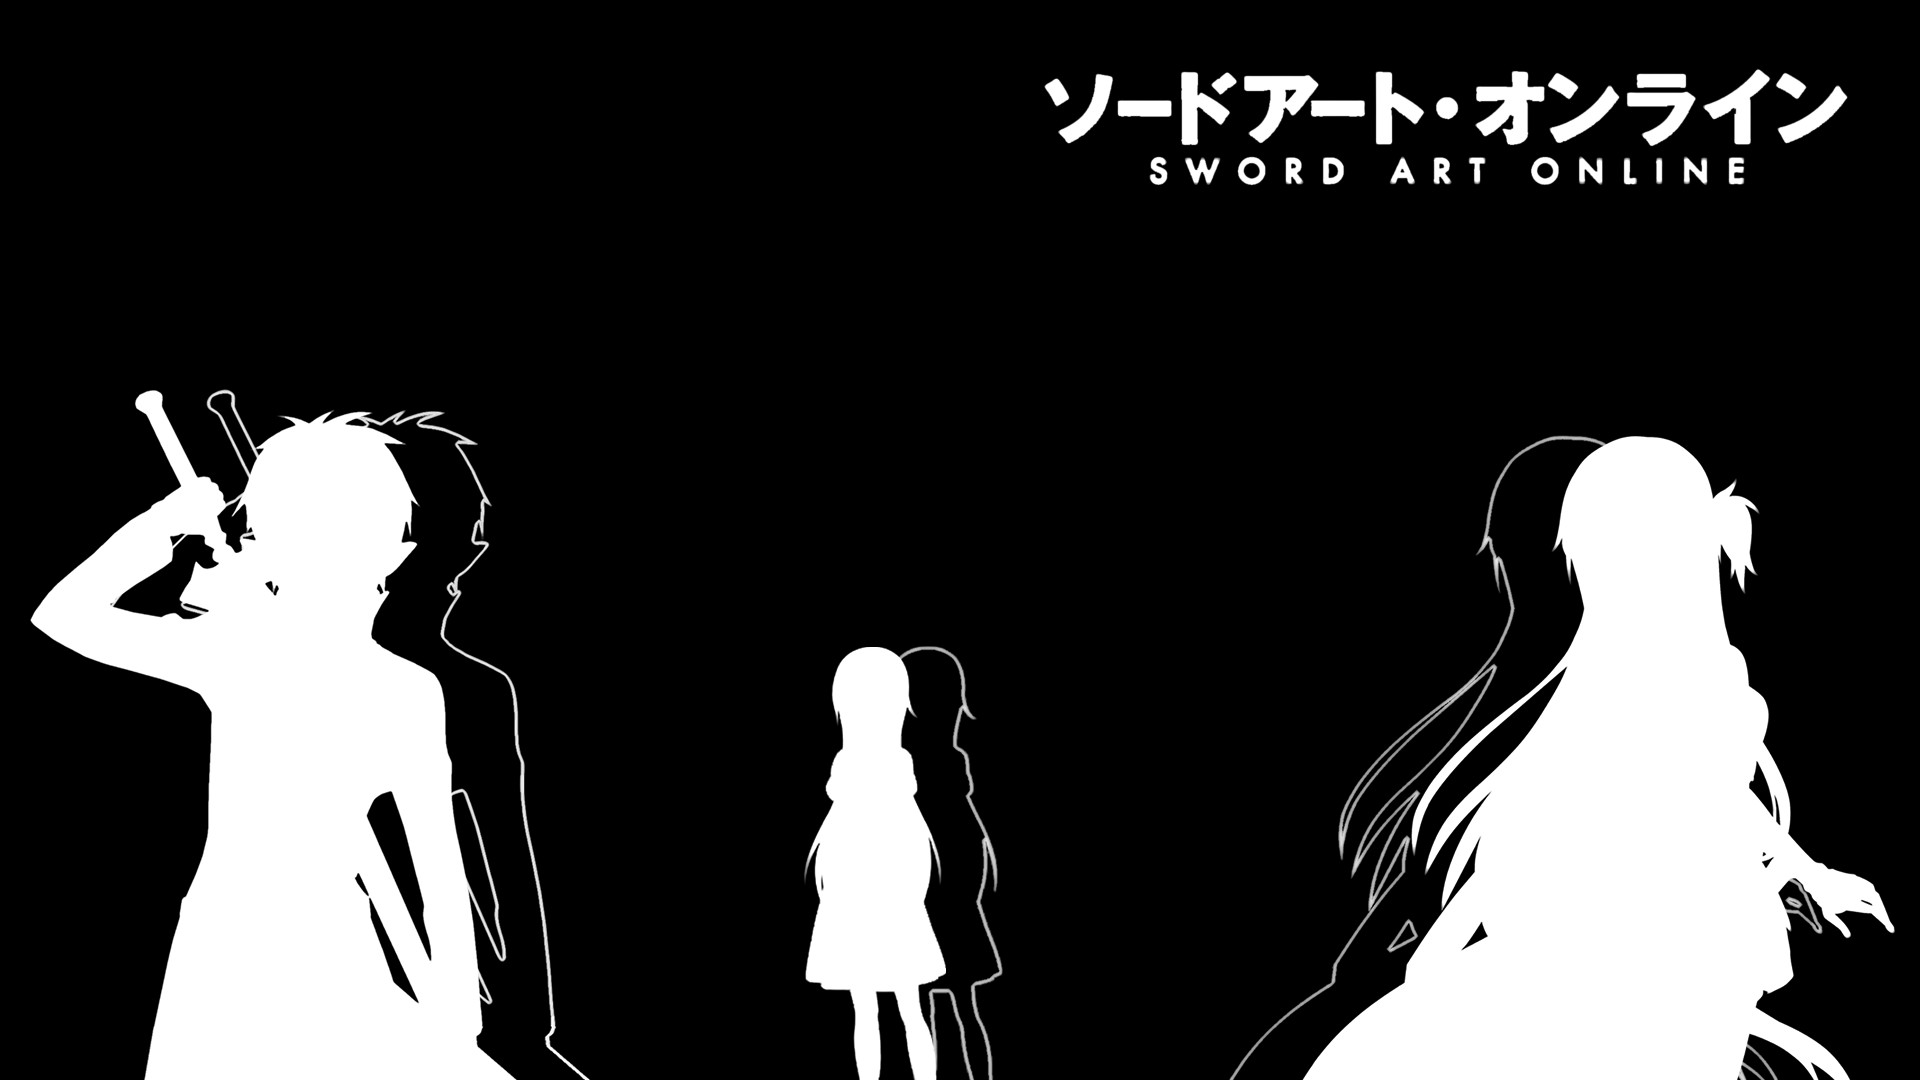 Anime Sword Art Online Kirigaya Kazuto Yuuki Asuna Yui Mhcp001 Wallpapers Hd Desktop And Mobile Backgrounds